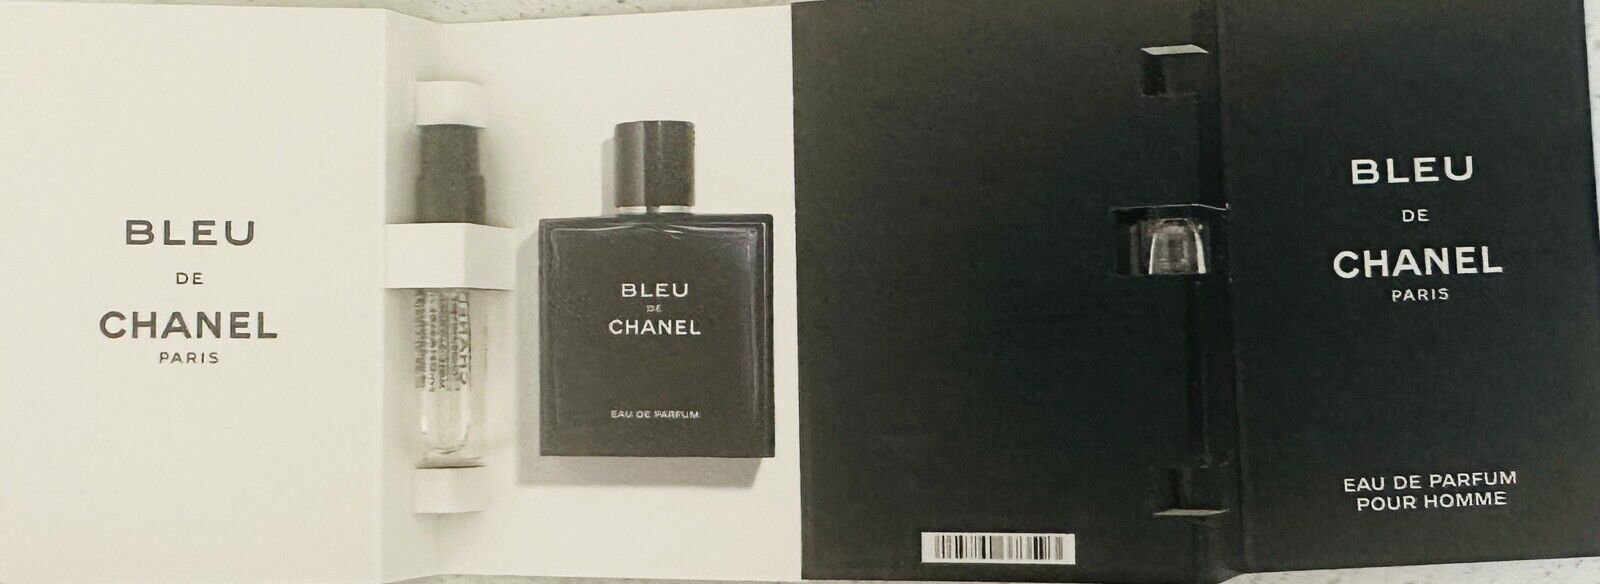 chanel blue men sample